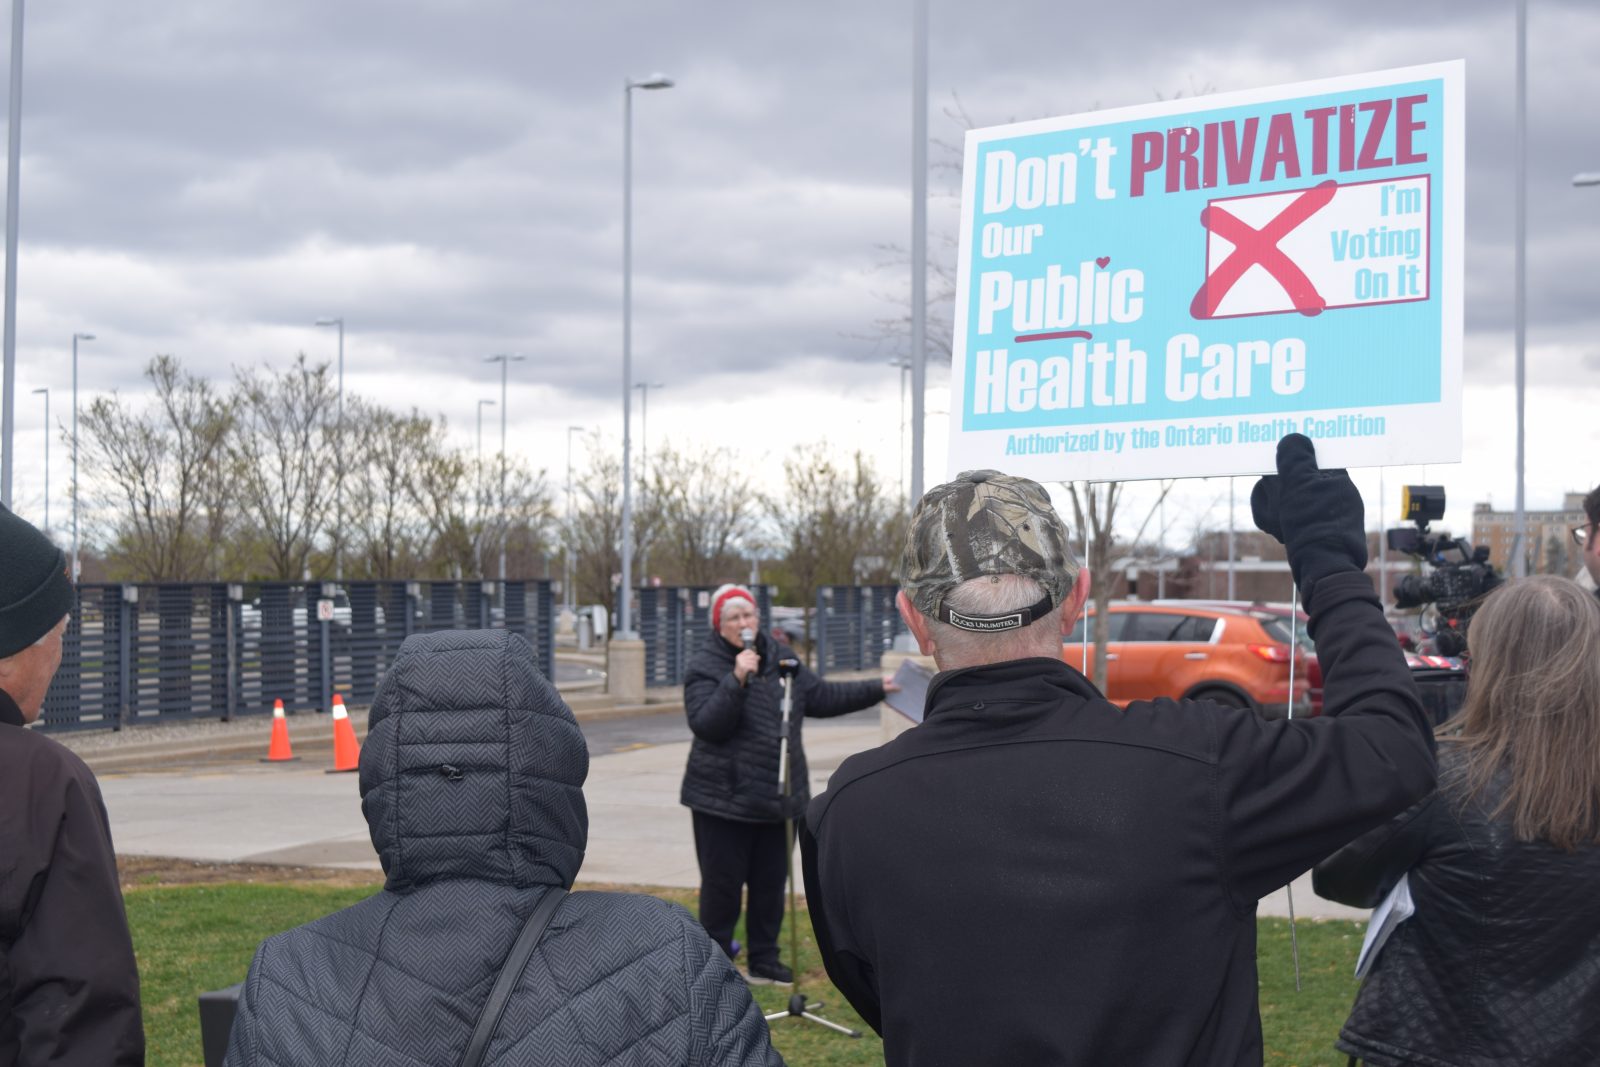 Vote to Stop the Privatization of Public Health Care